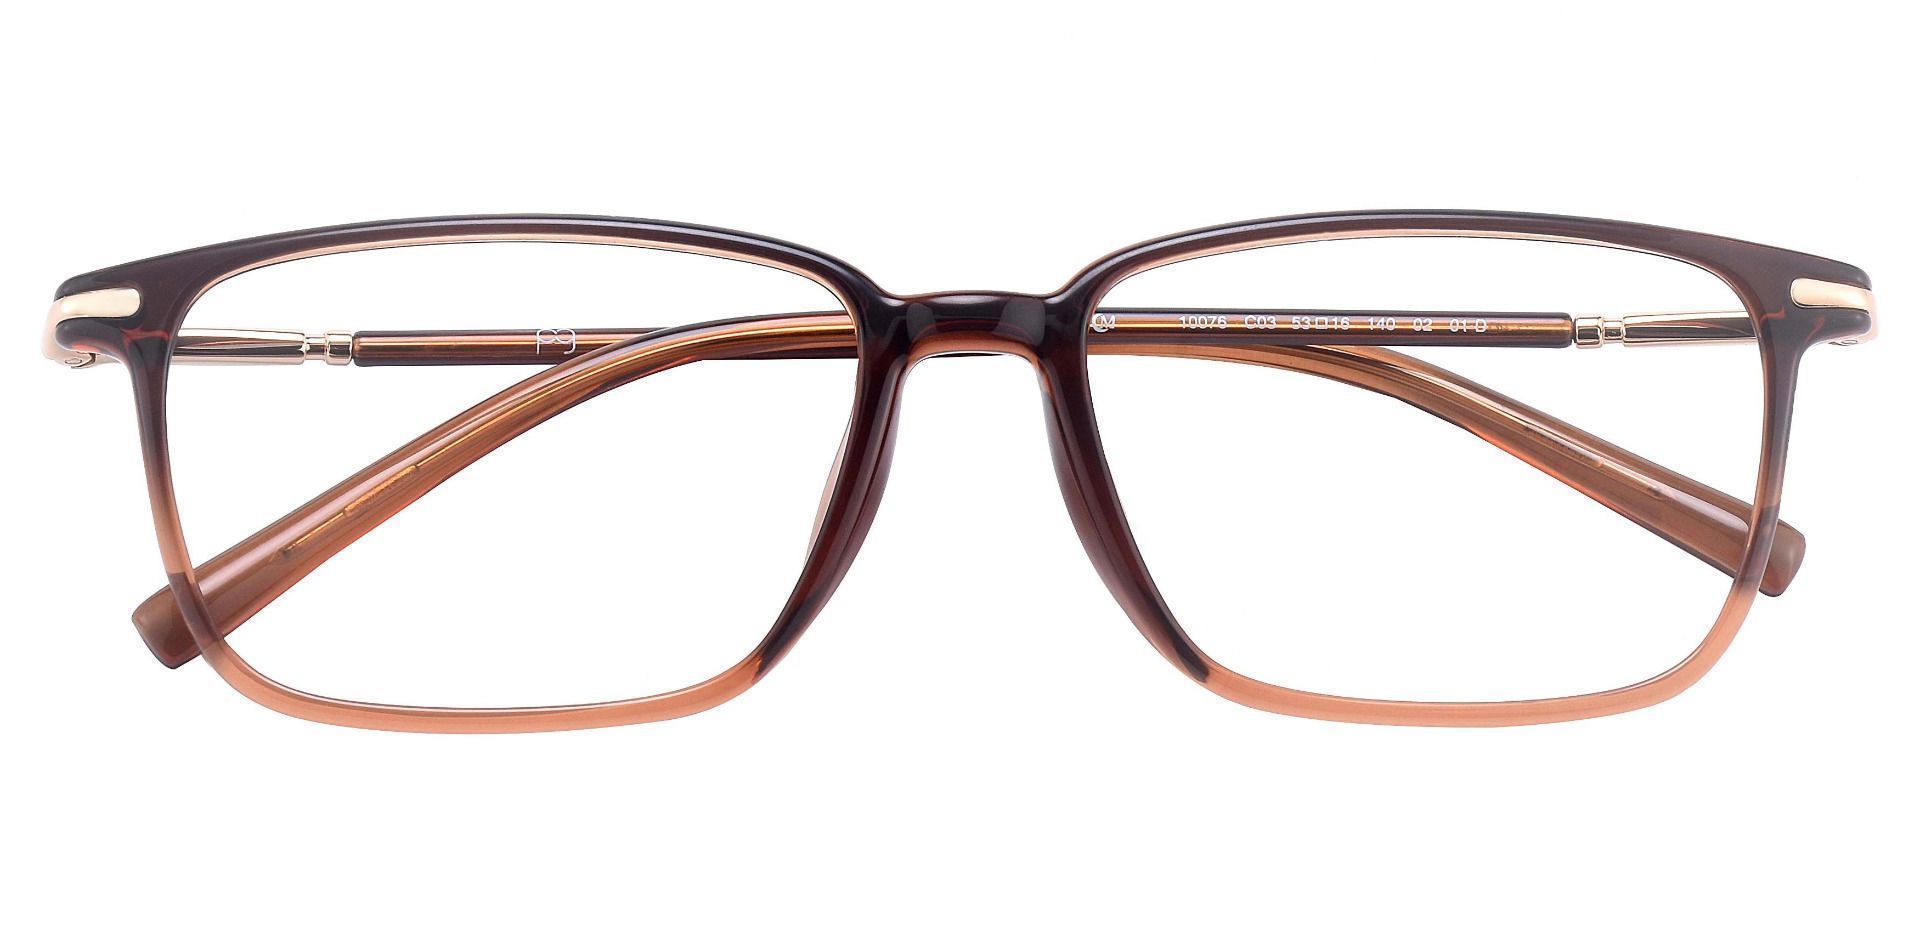 Surrey Rectangle Prescription Glasses - Brown